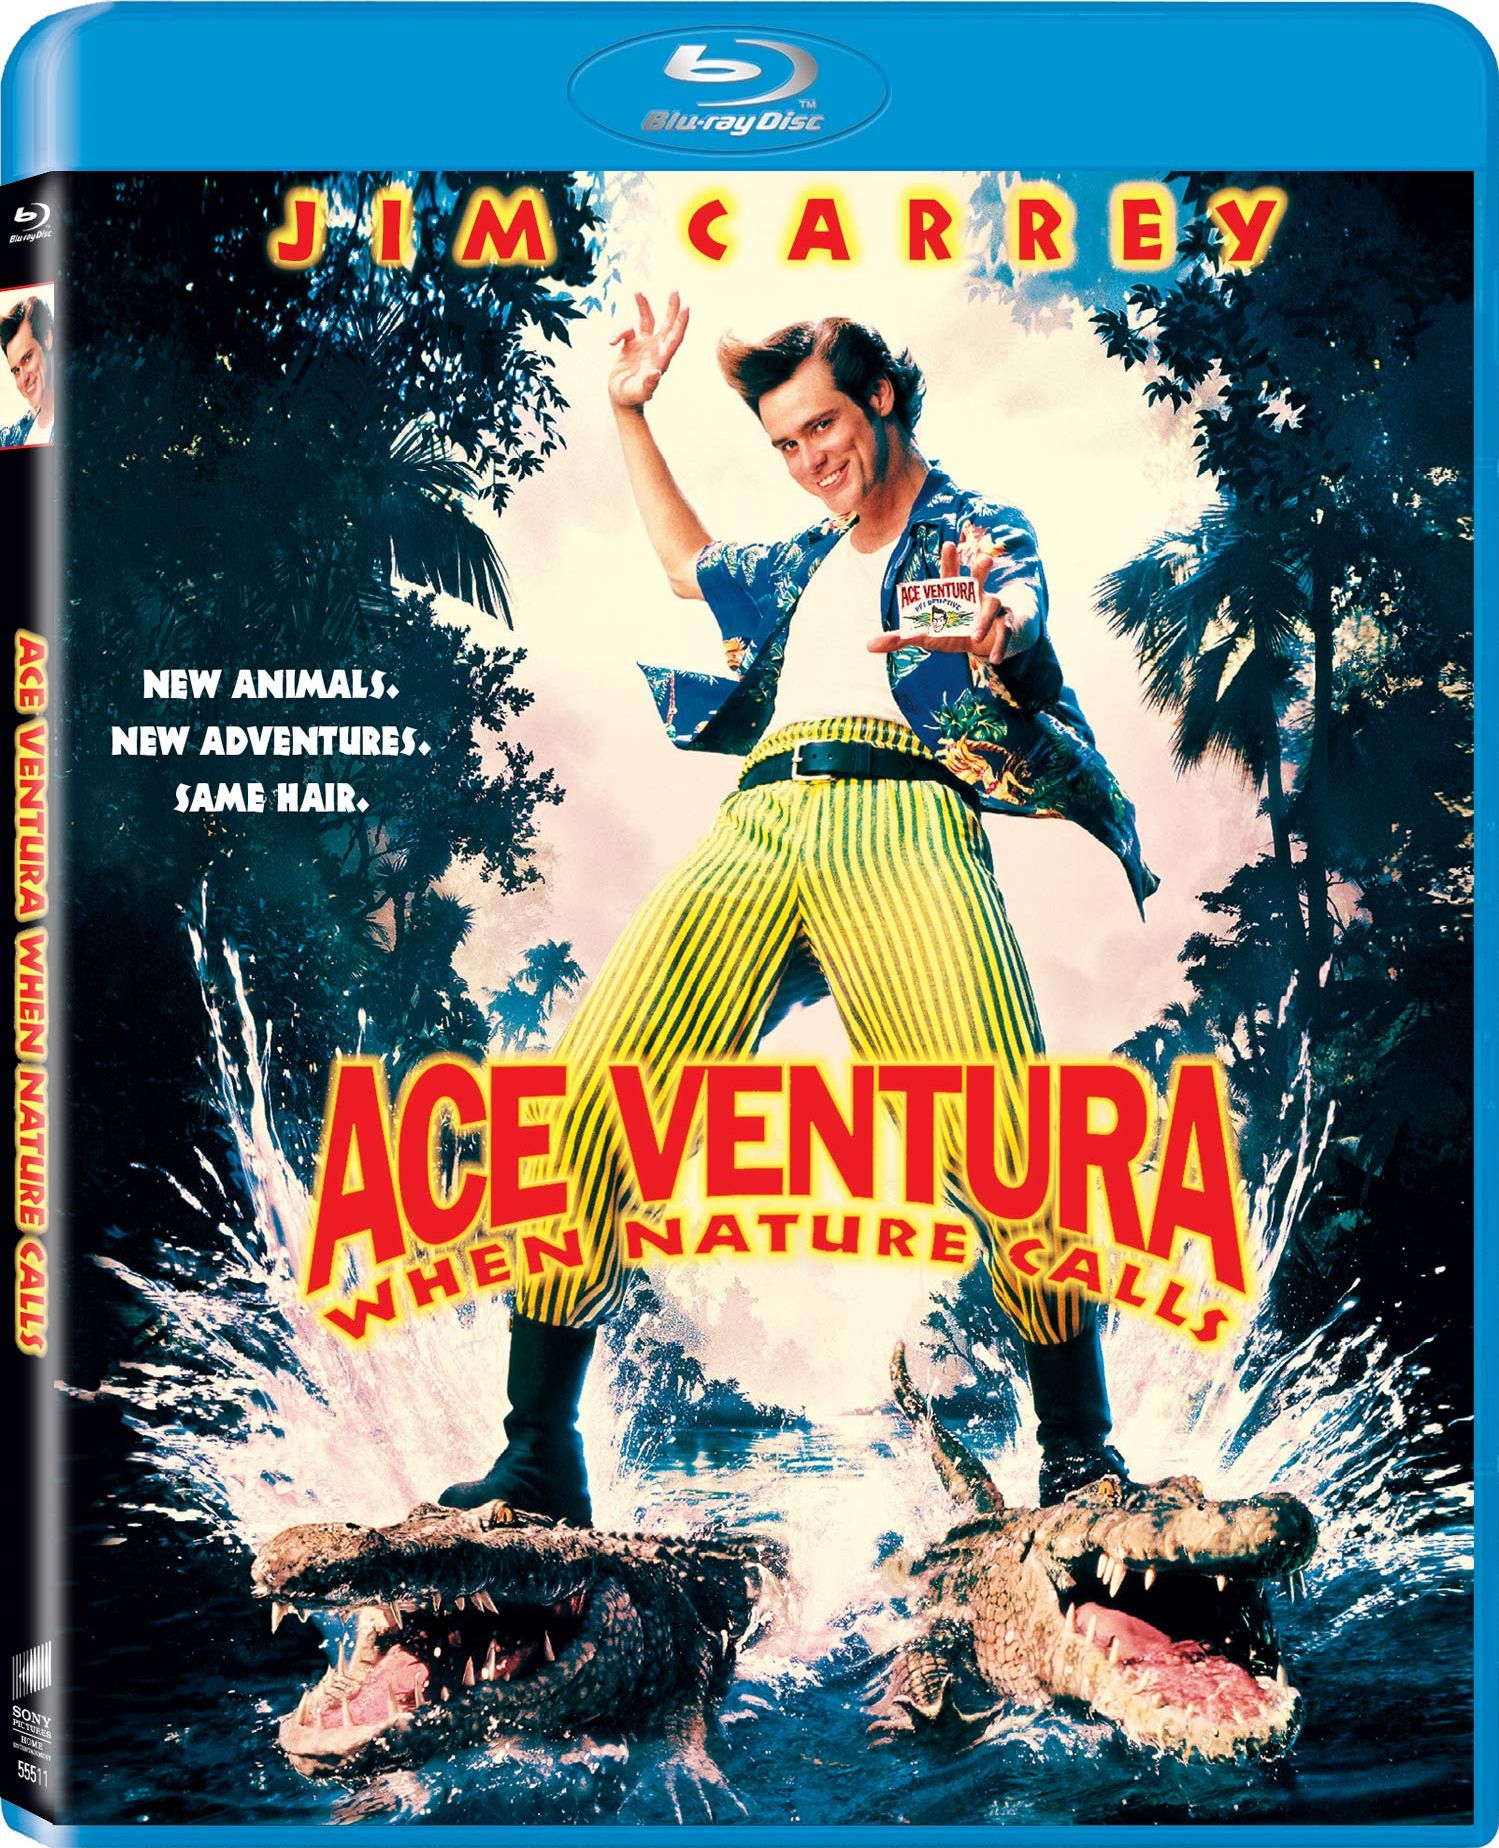 Ace Ventura: Nature Release Date